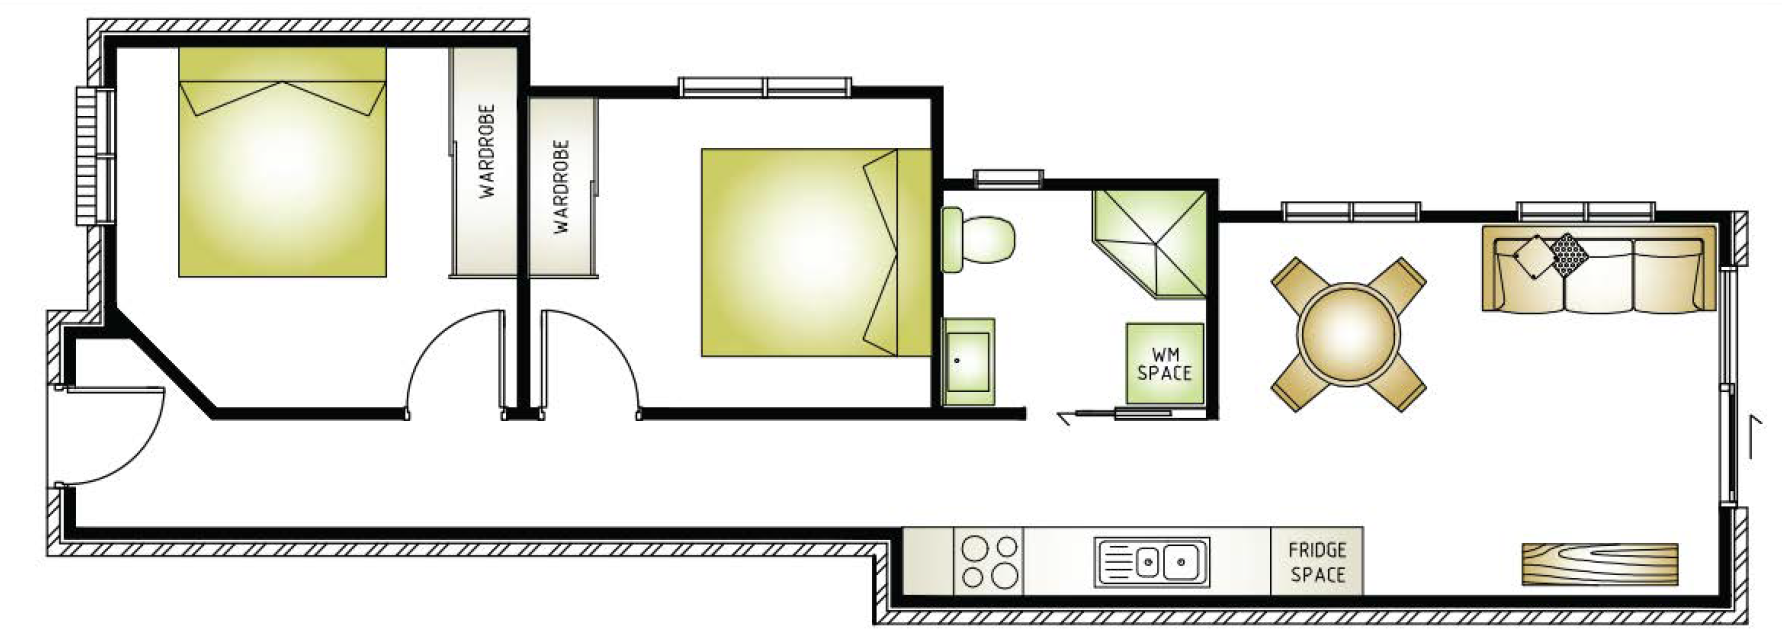 Erskine Park granny flat floor plan 2 bedroom